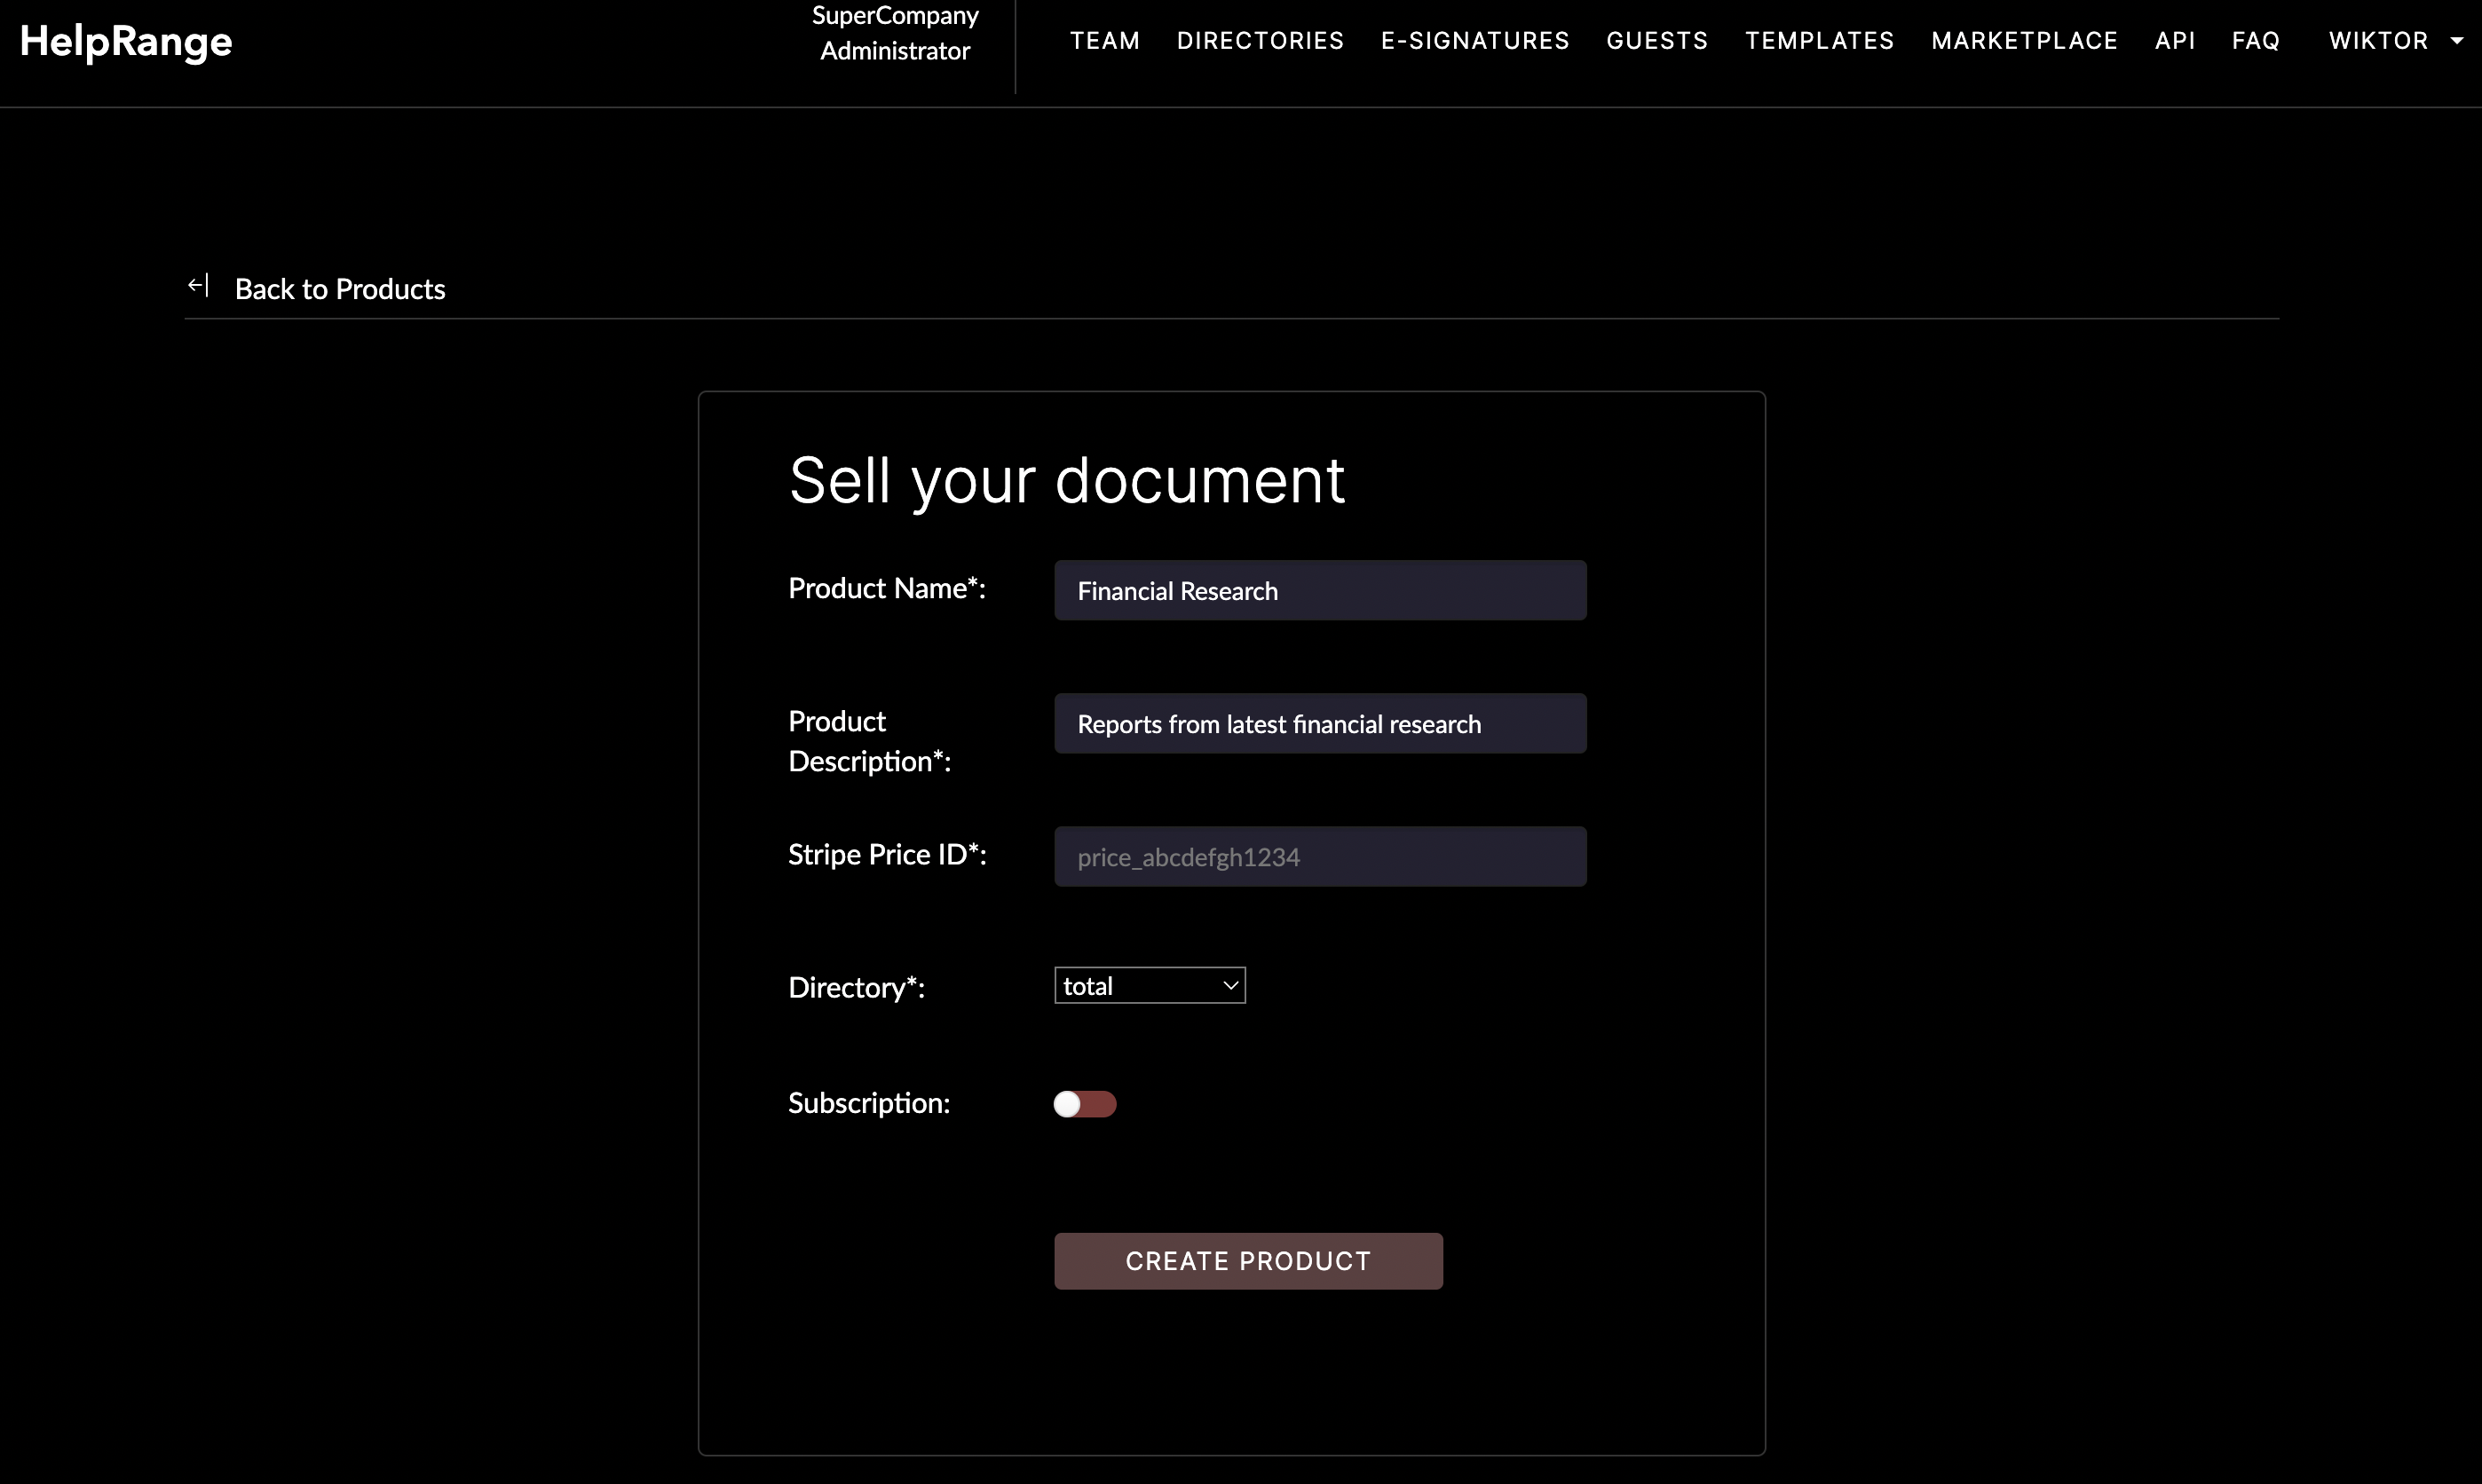 HelpRange selling document